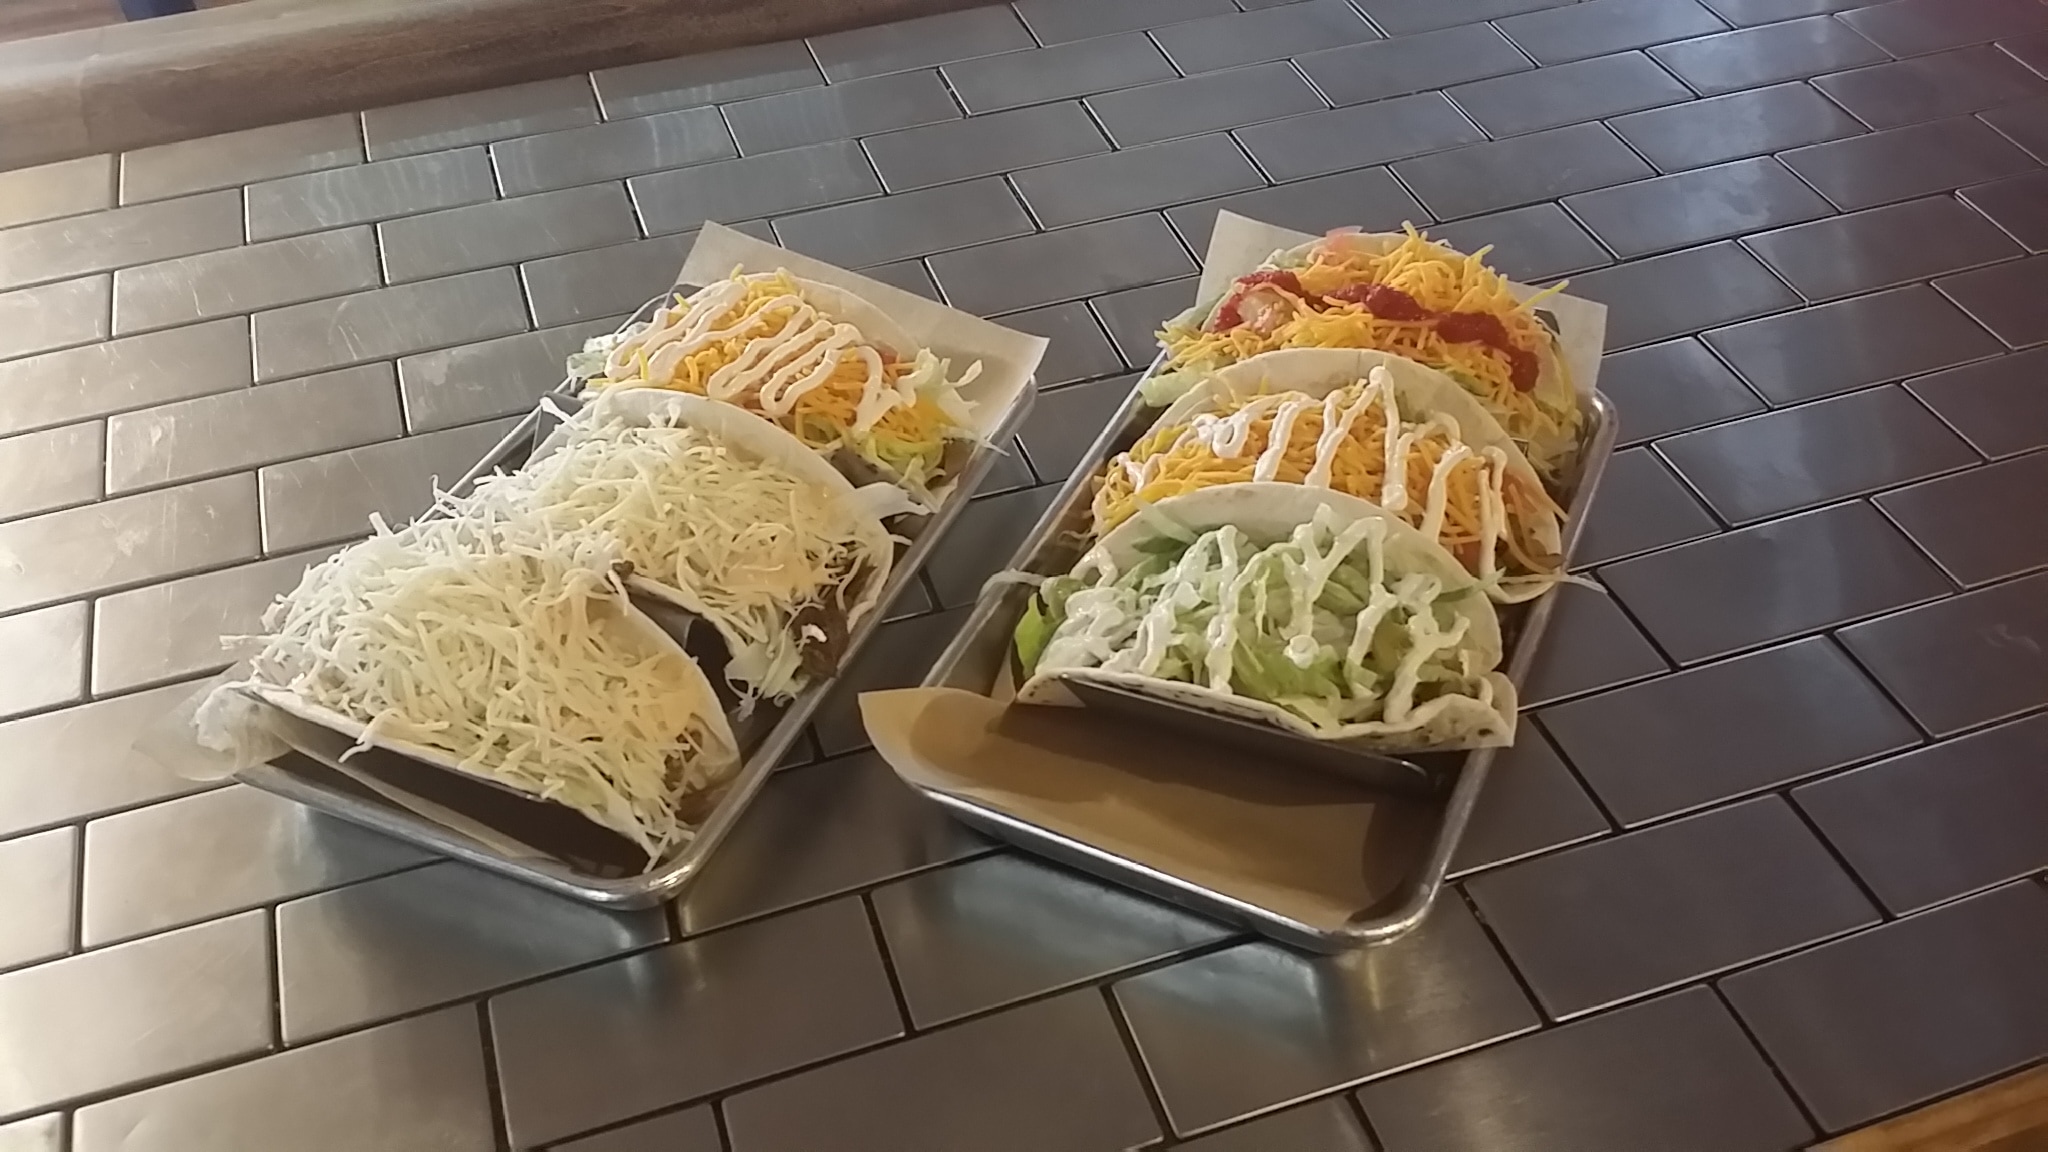 Killer’s Tacos